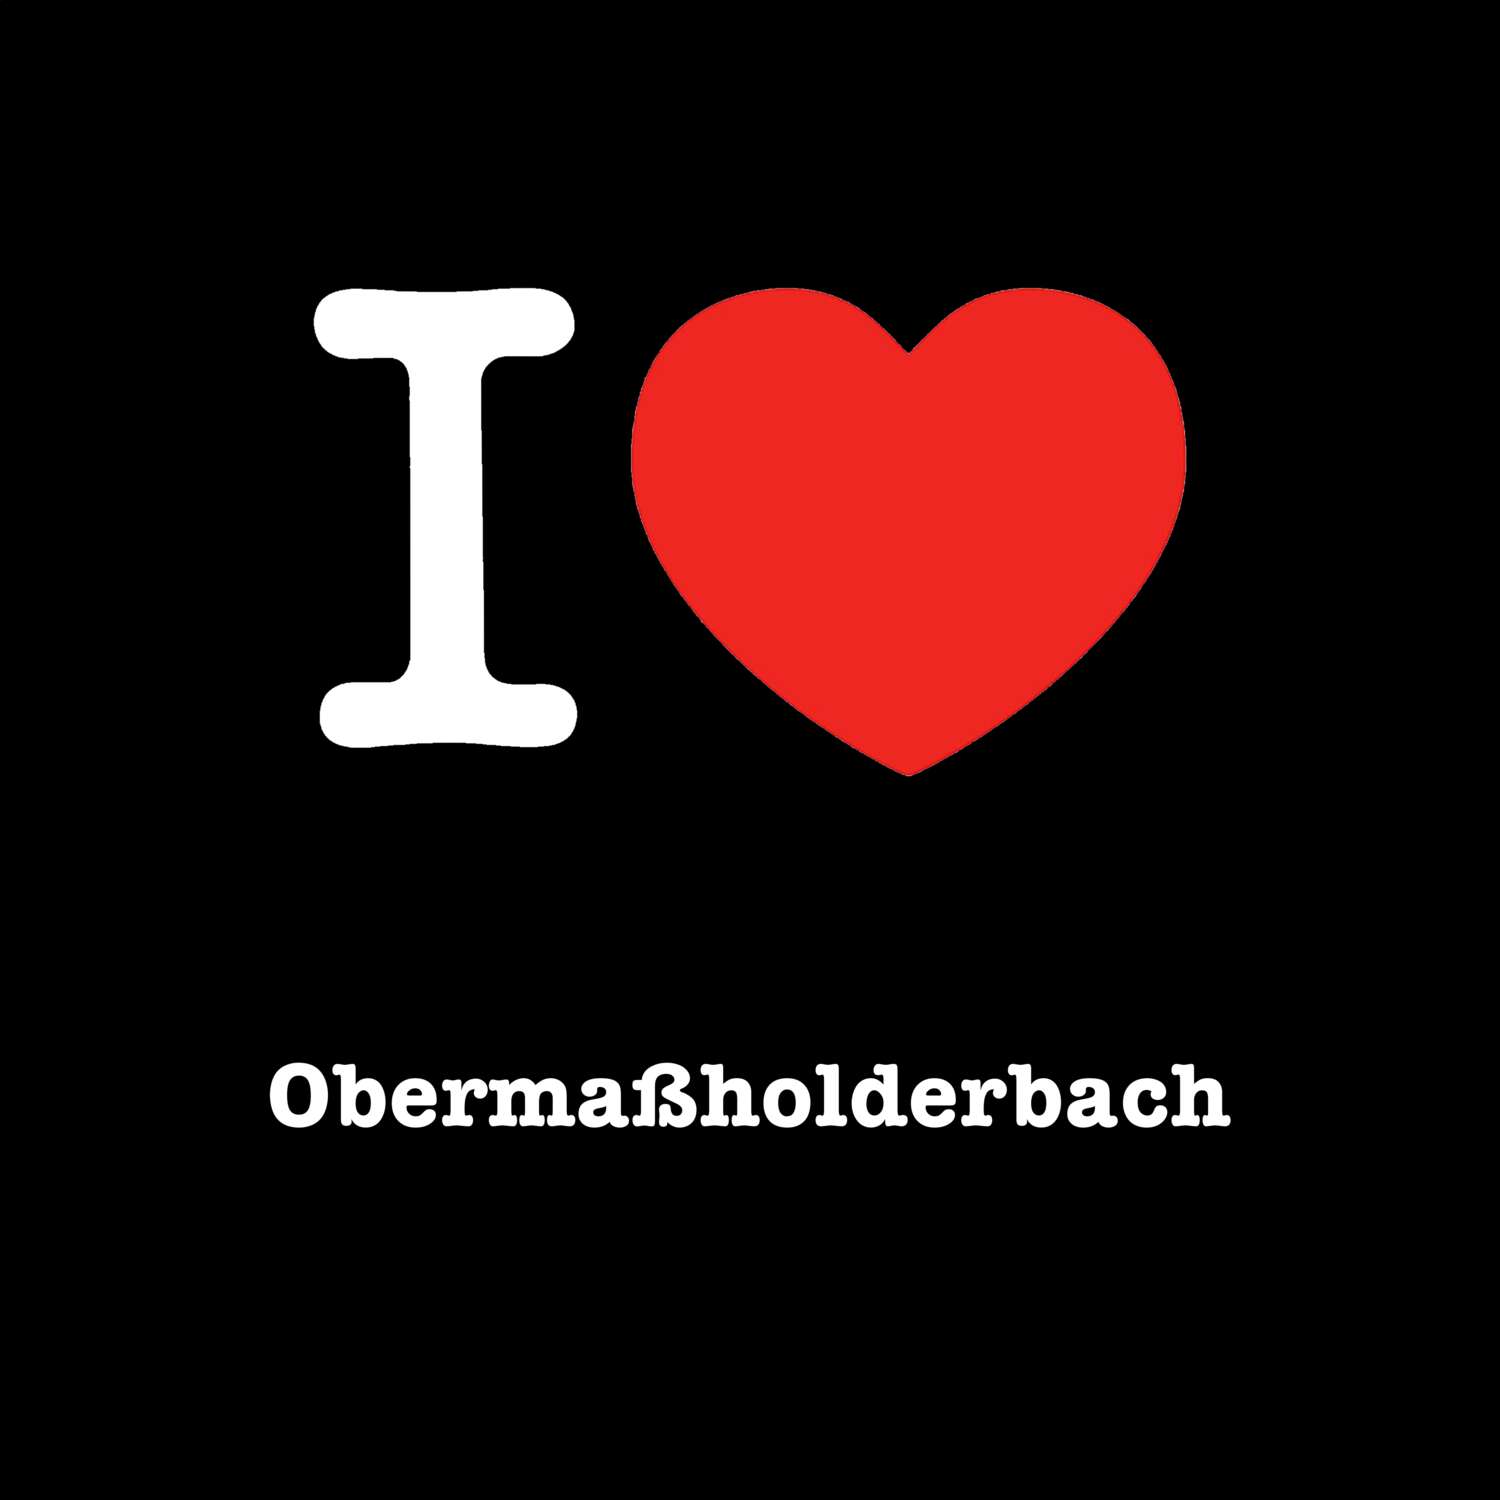 Obermaßholderbach T-Shirt »I love«